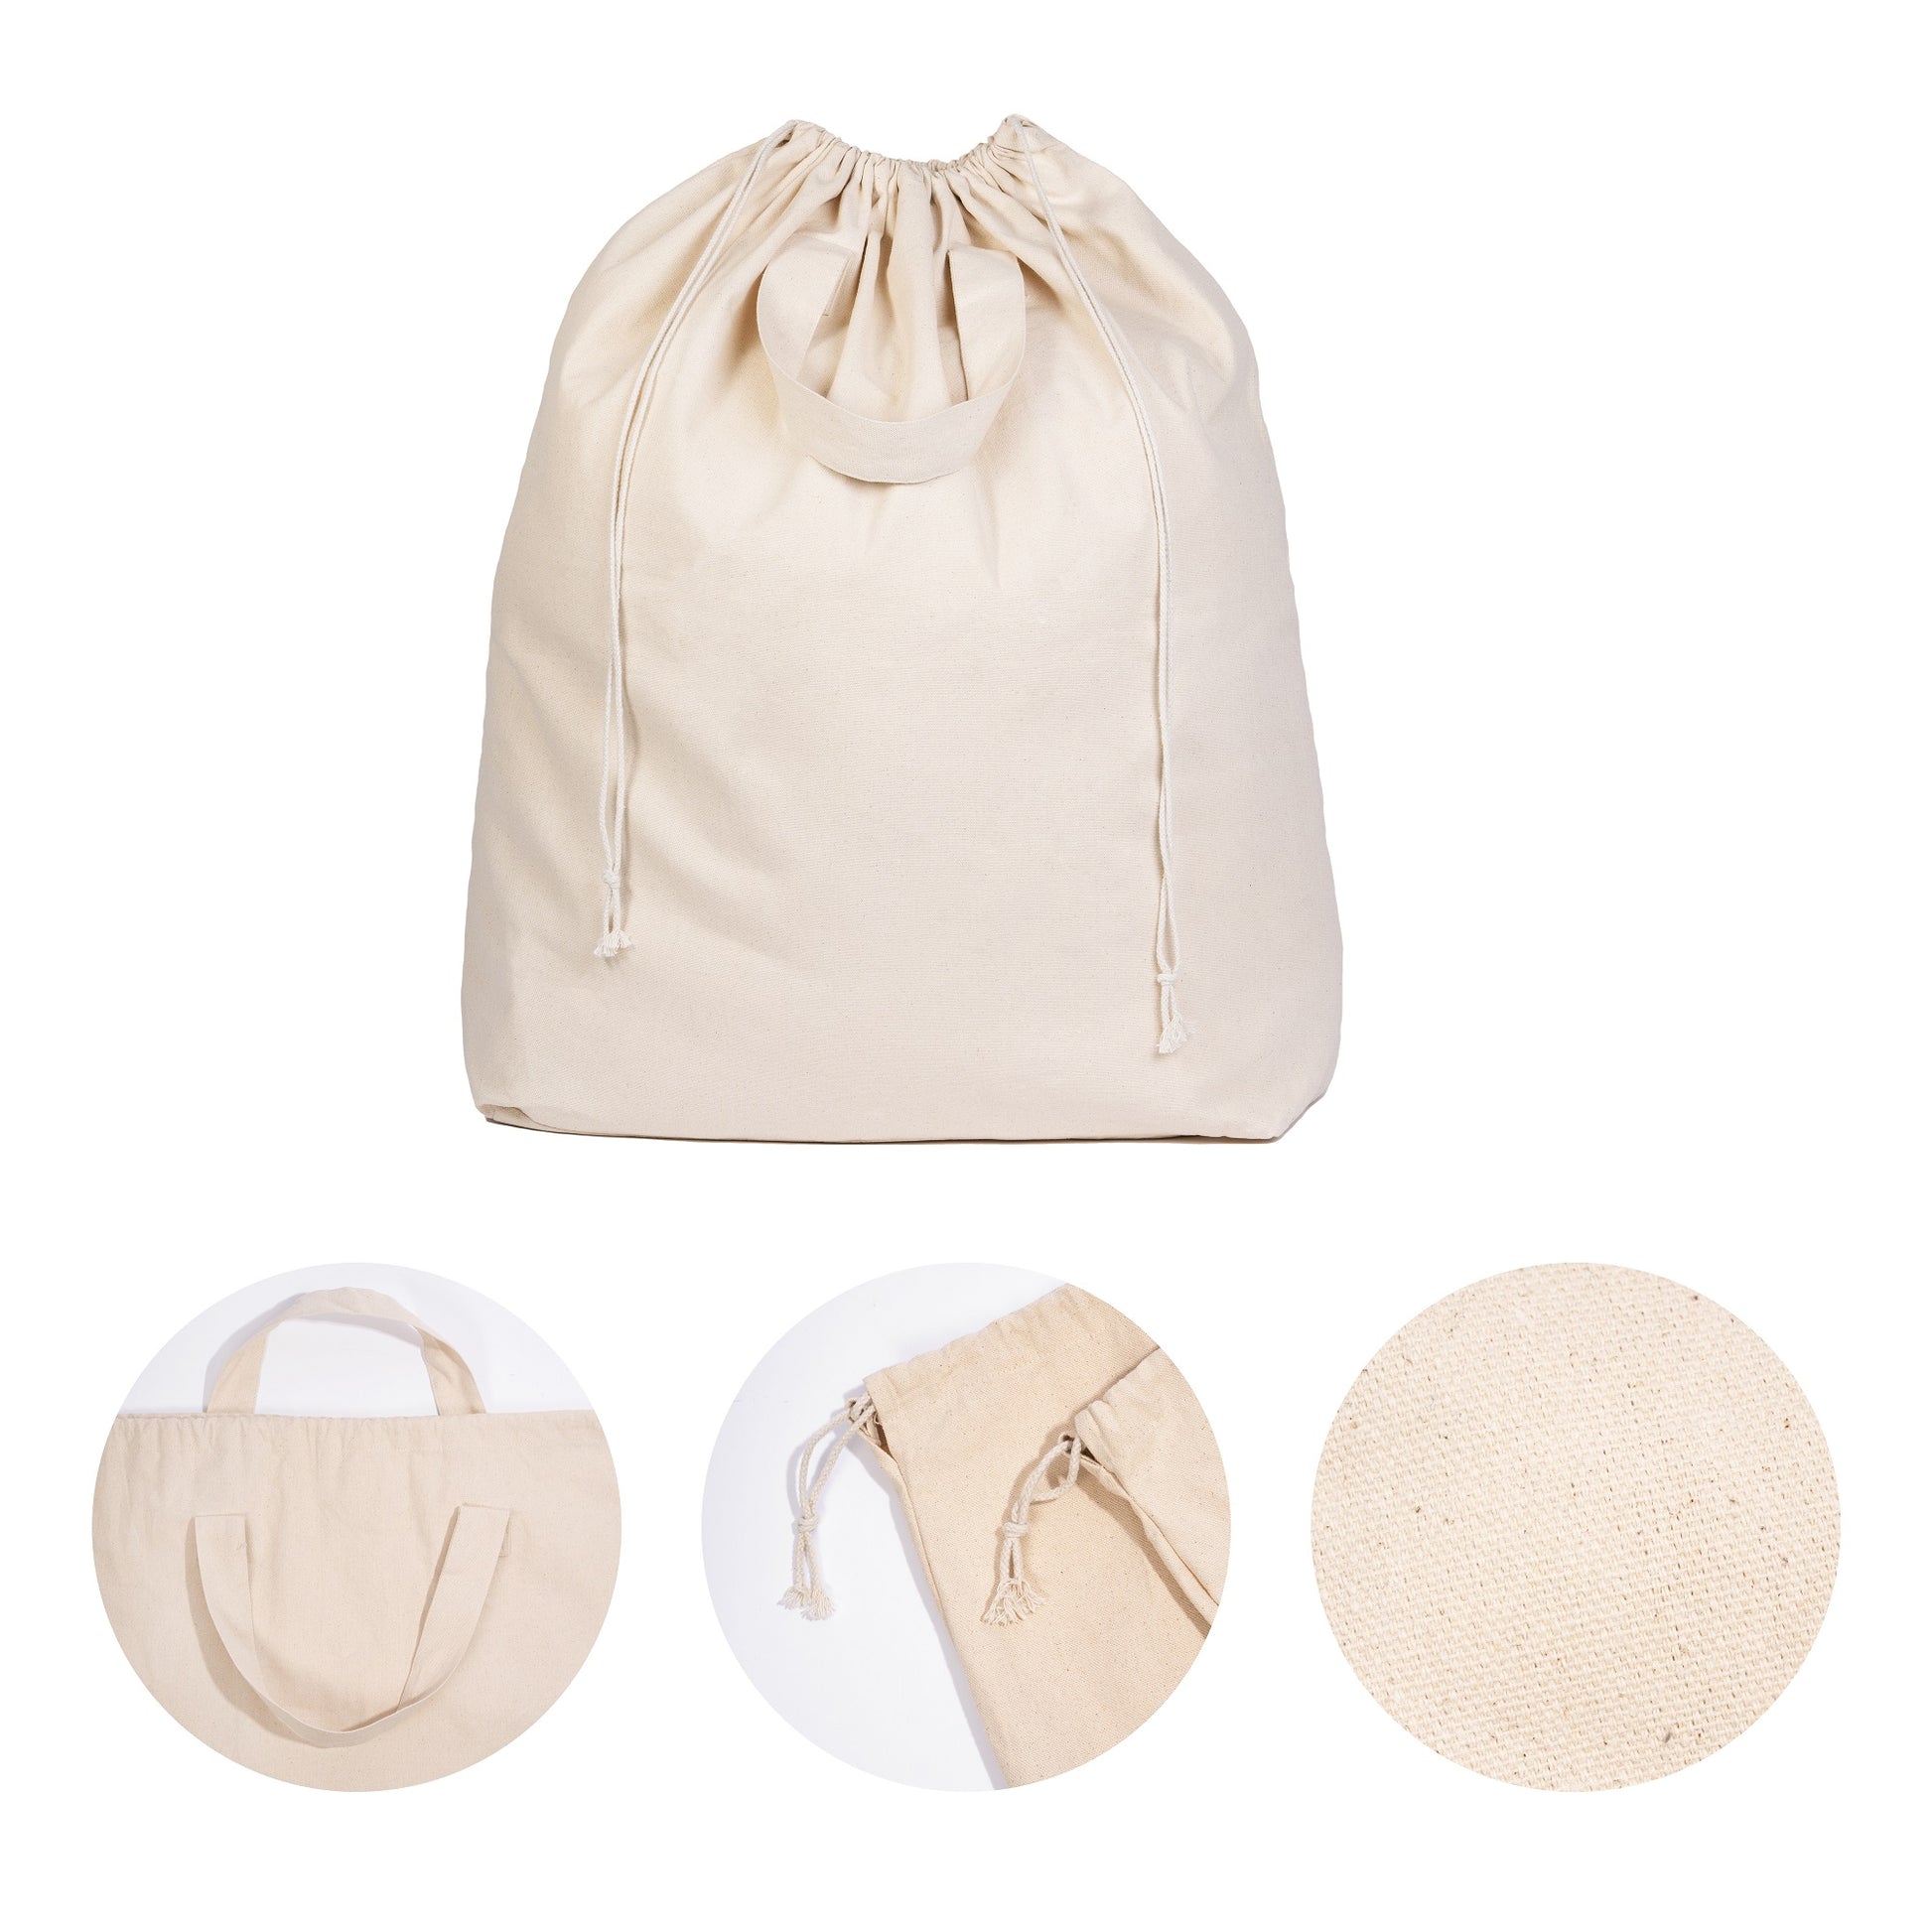 Small Drawstring Bag, 100% Cotton, Quick Turnaround Time